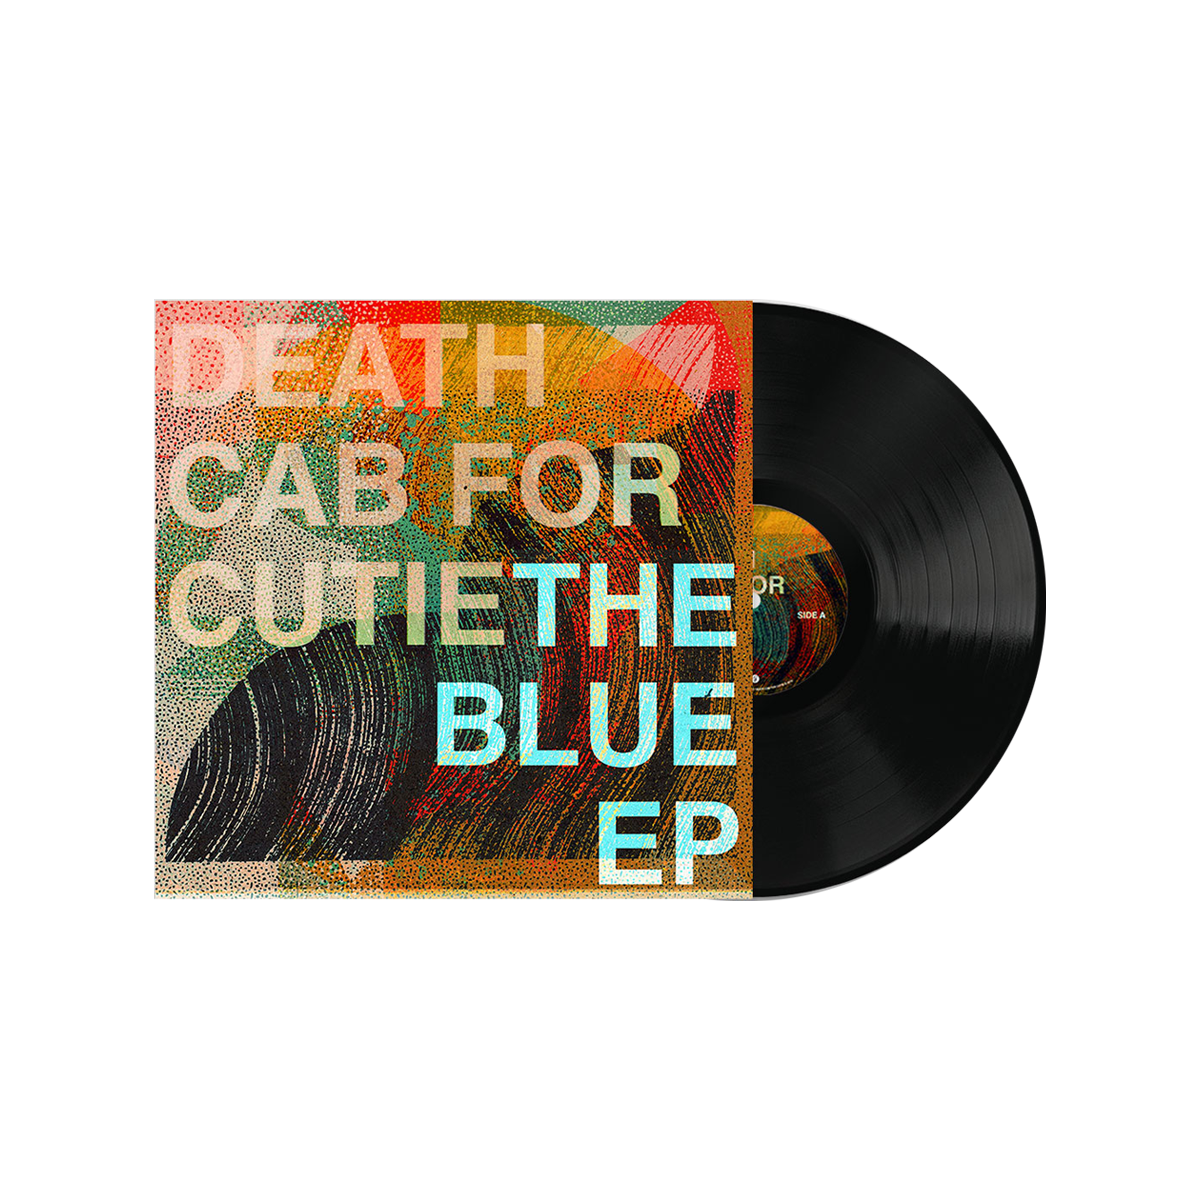 The Blue Vinyl Death Cab Cutie